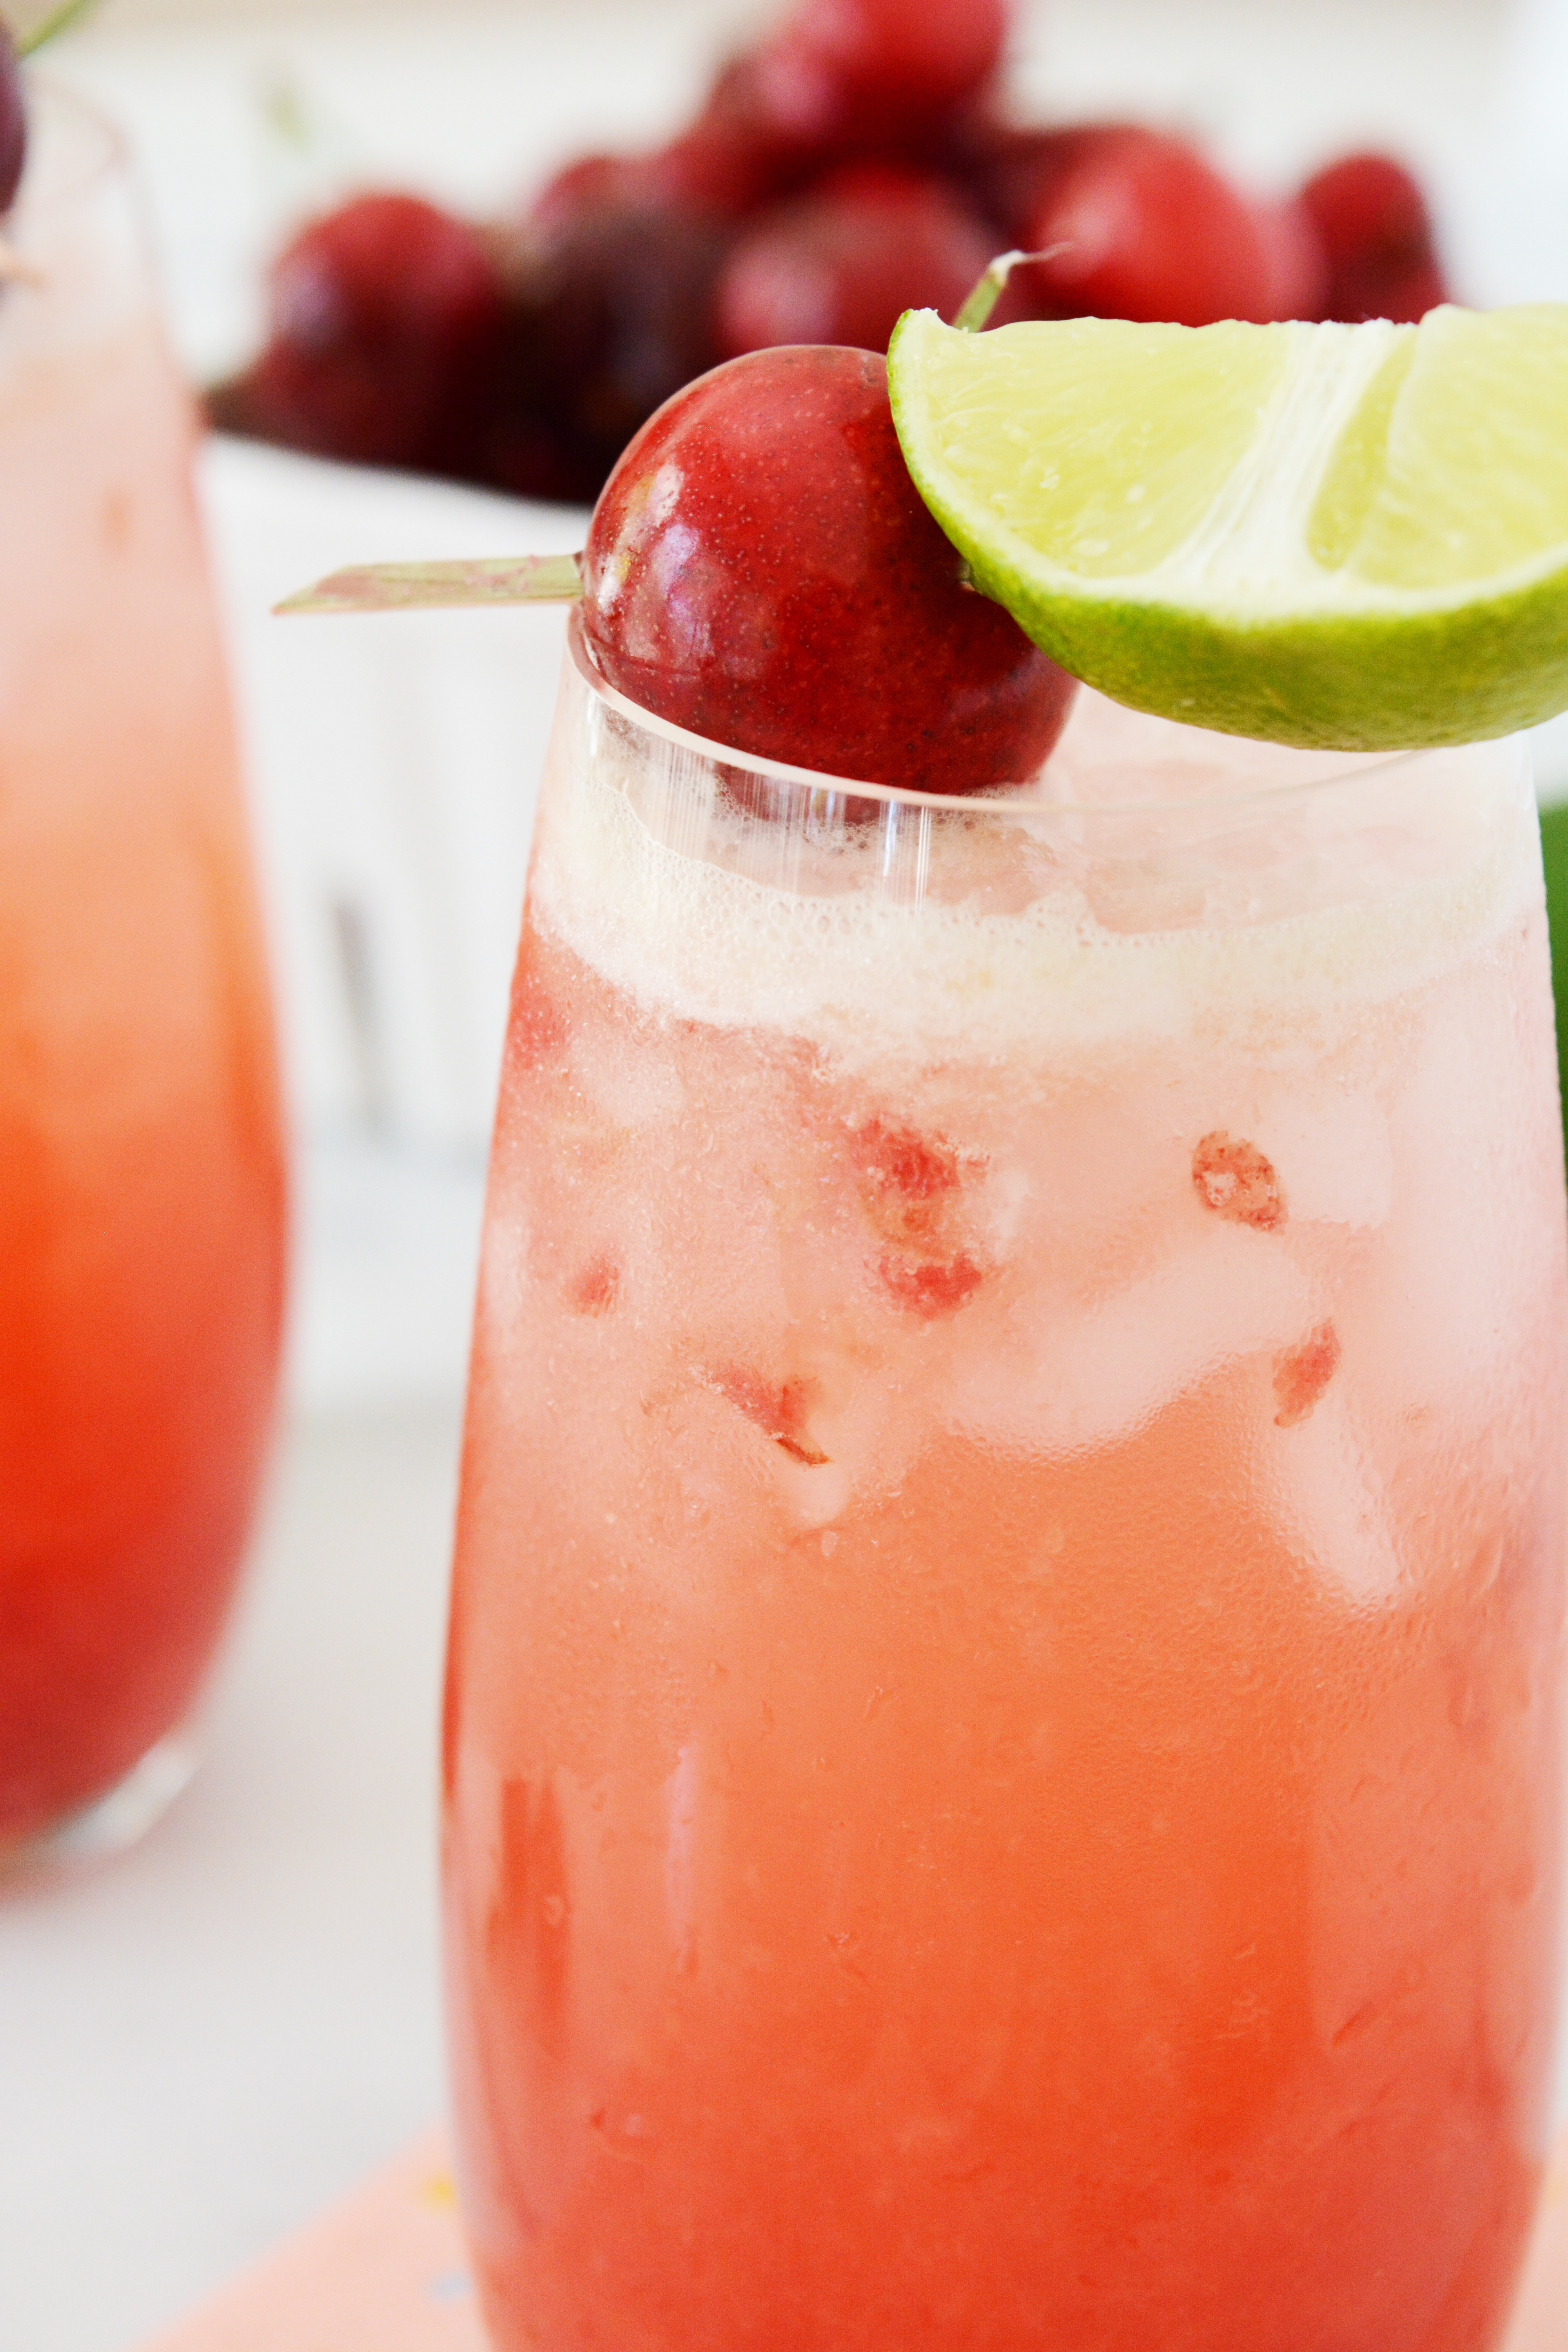 Cherry Limeade recipe - a healthier take on a drive-thru classic.